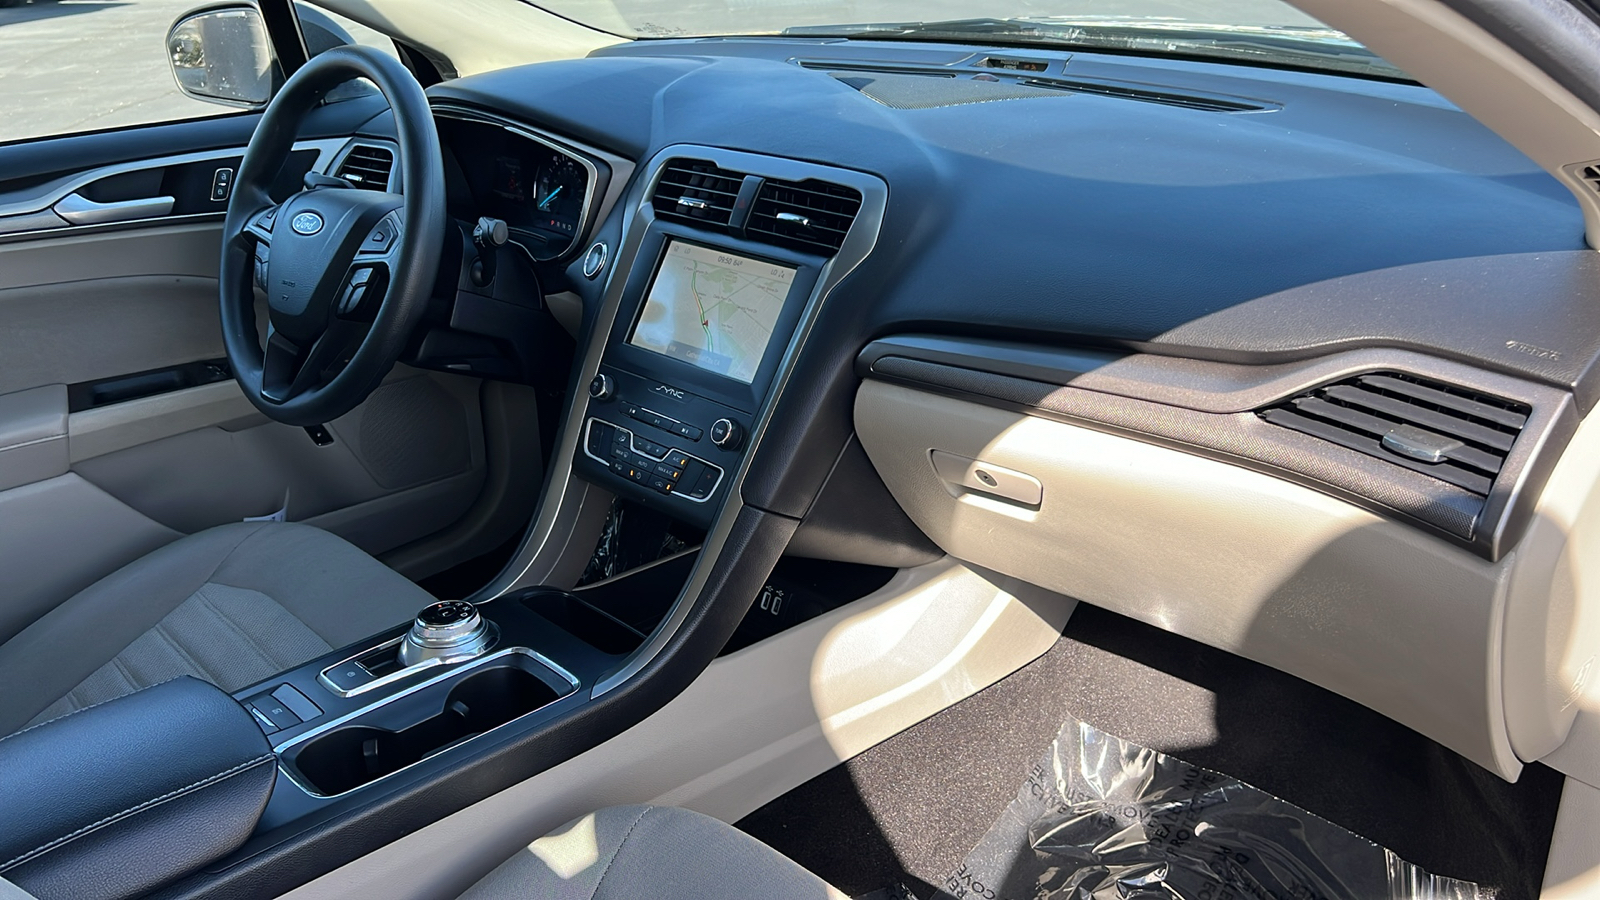 2020 Ford Fusion Hybrid SE 29